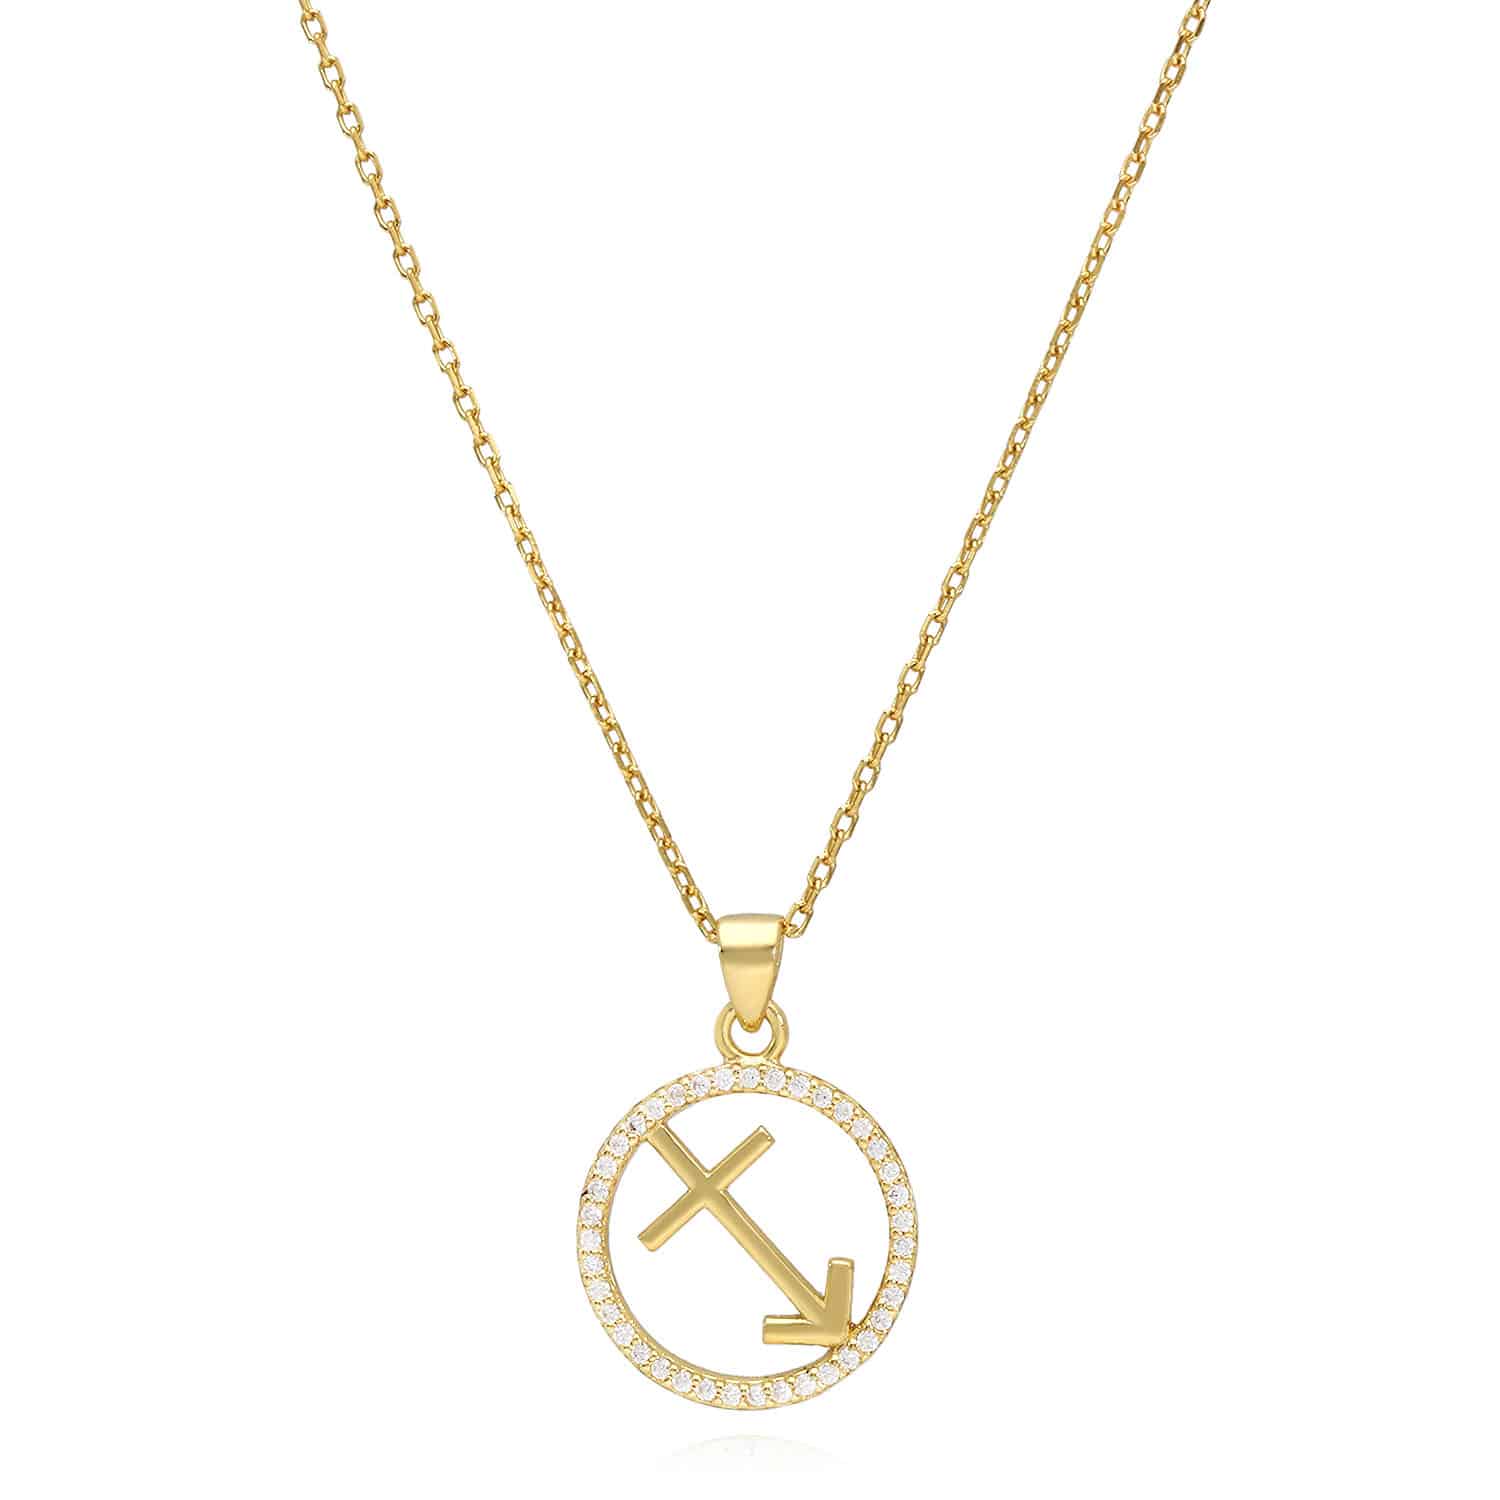 18K Gold Over Silver Simulated Diamond Zodiac Charm Pendant Necklace 16"-18" Adj - Sagittarius